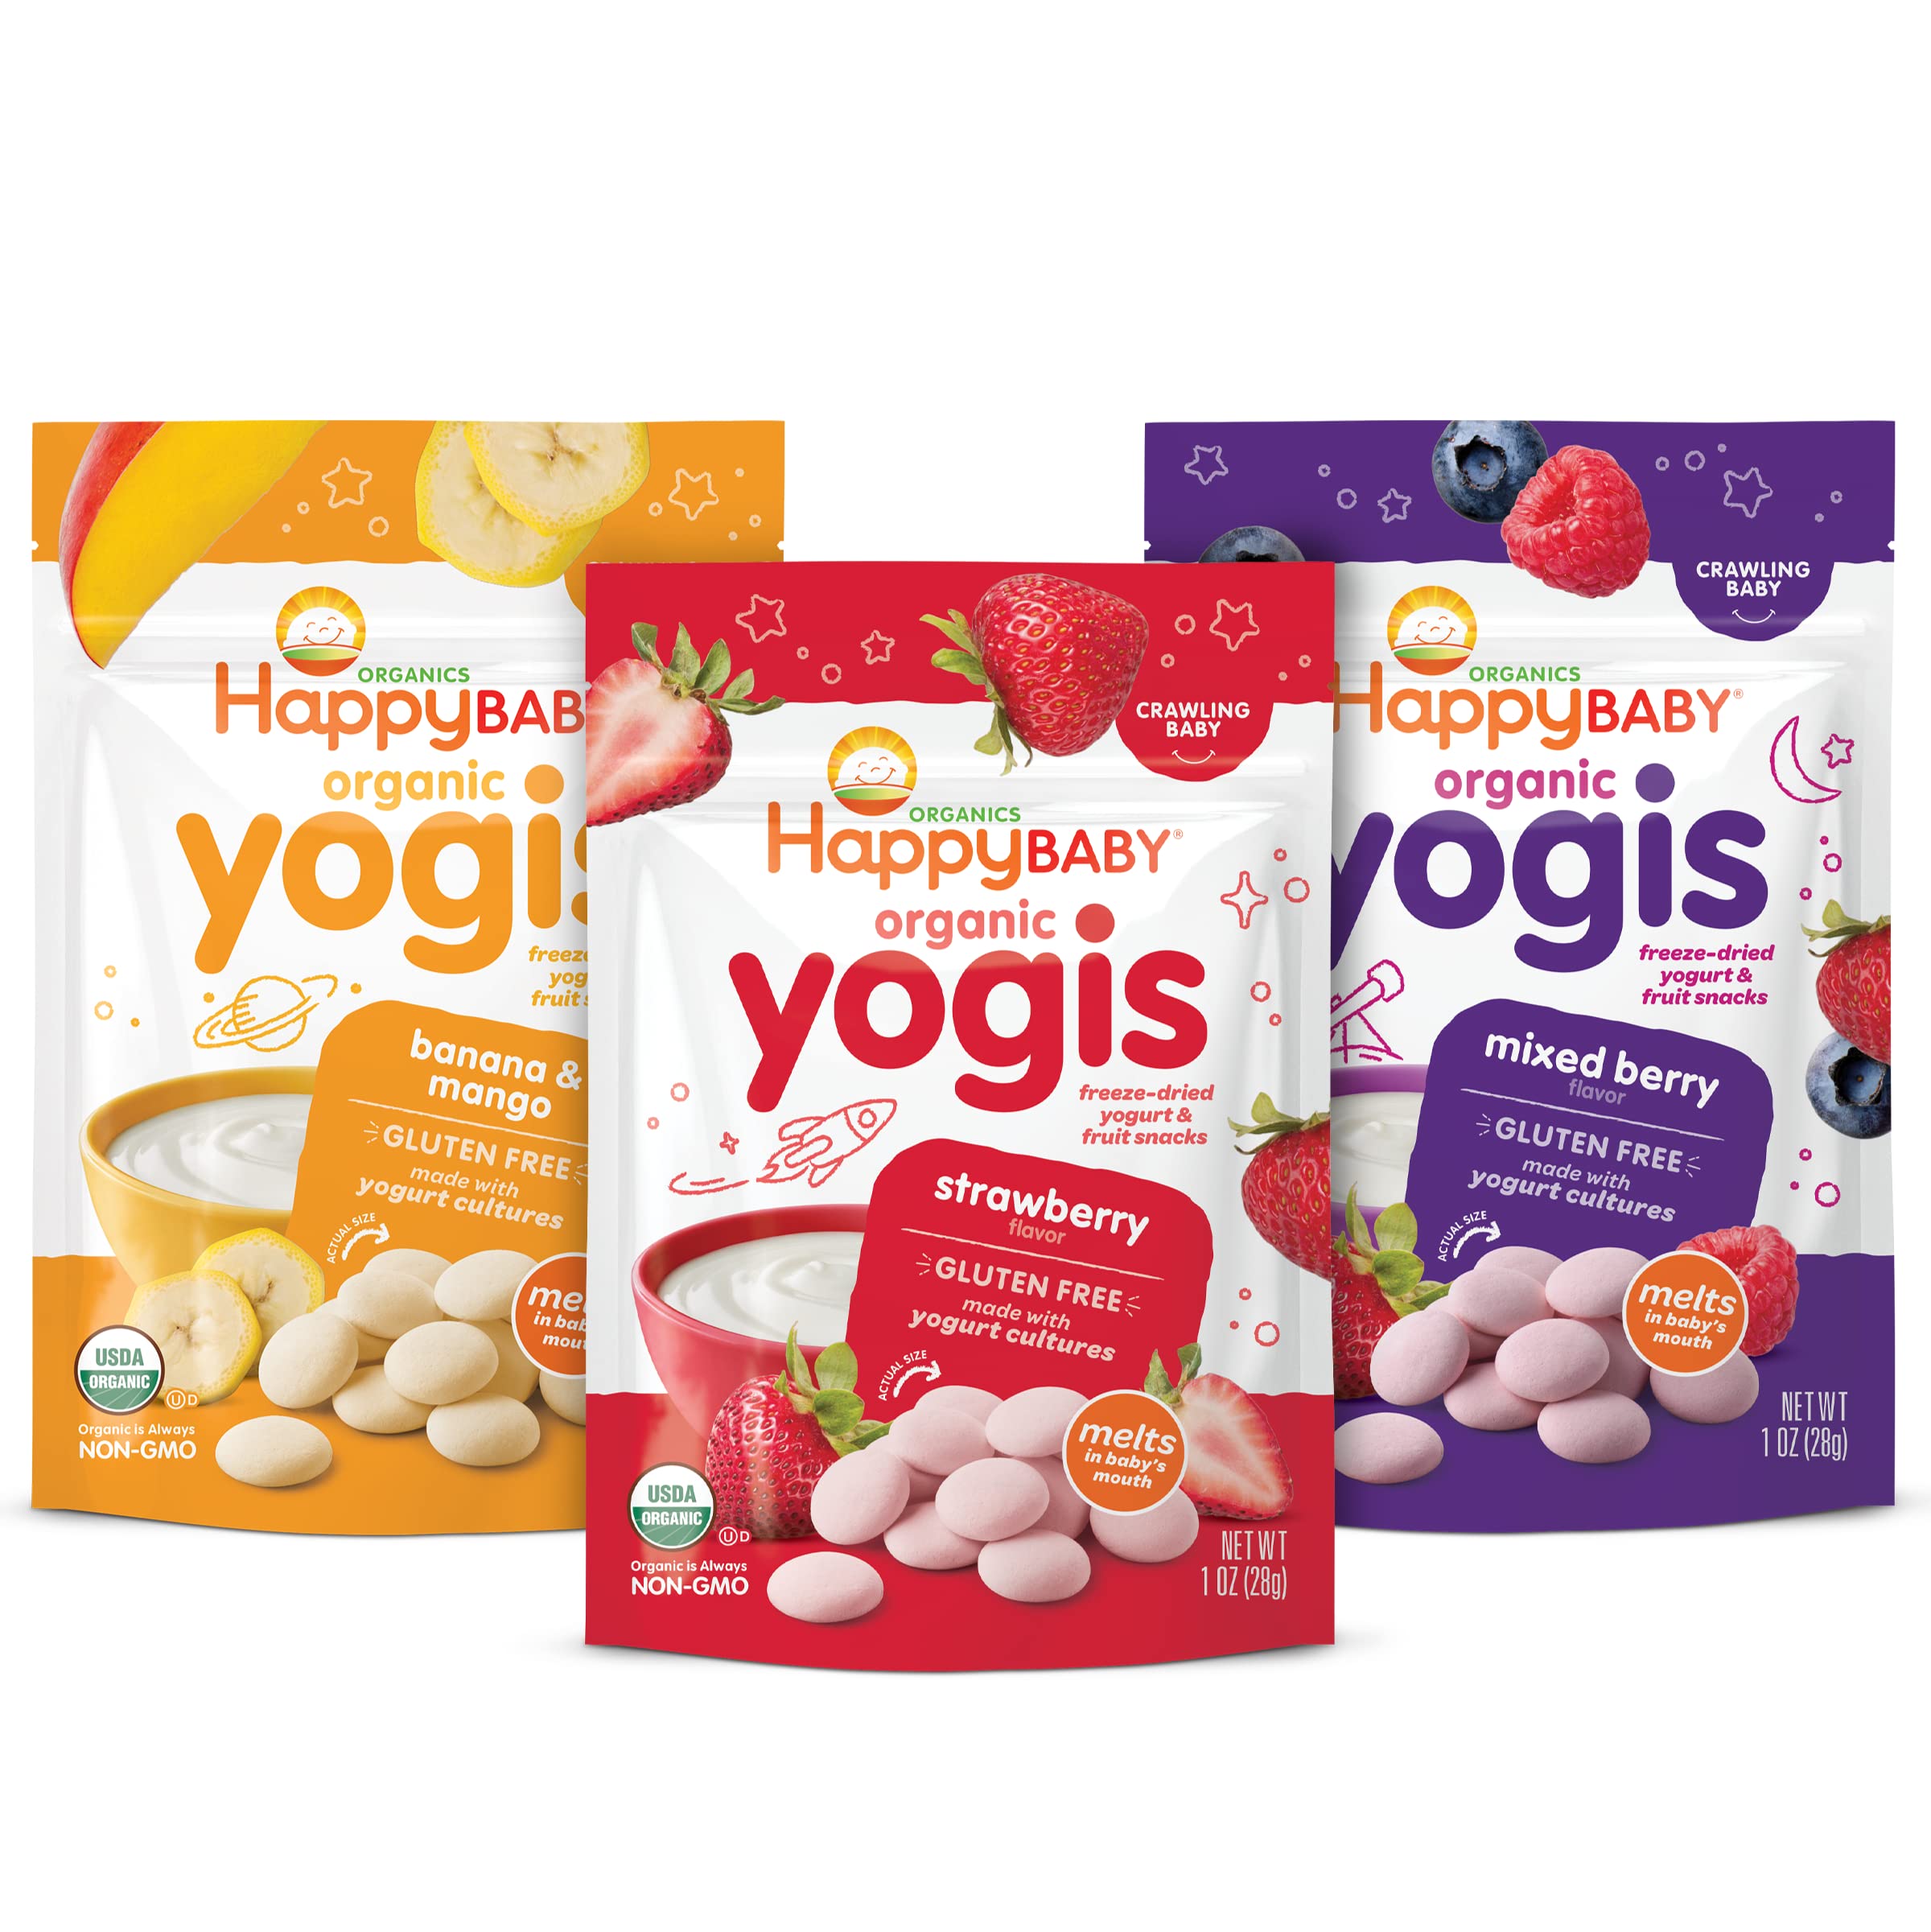 Happy Baby Organics Yogis Freeze-Dried Yogurt & Fruit Snacks, 3 Flavor Variety Pack, 1 Ounce (Pack of 3)